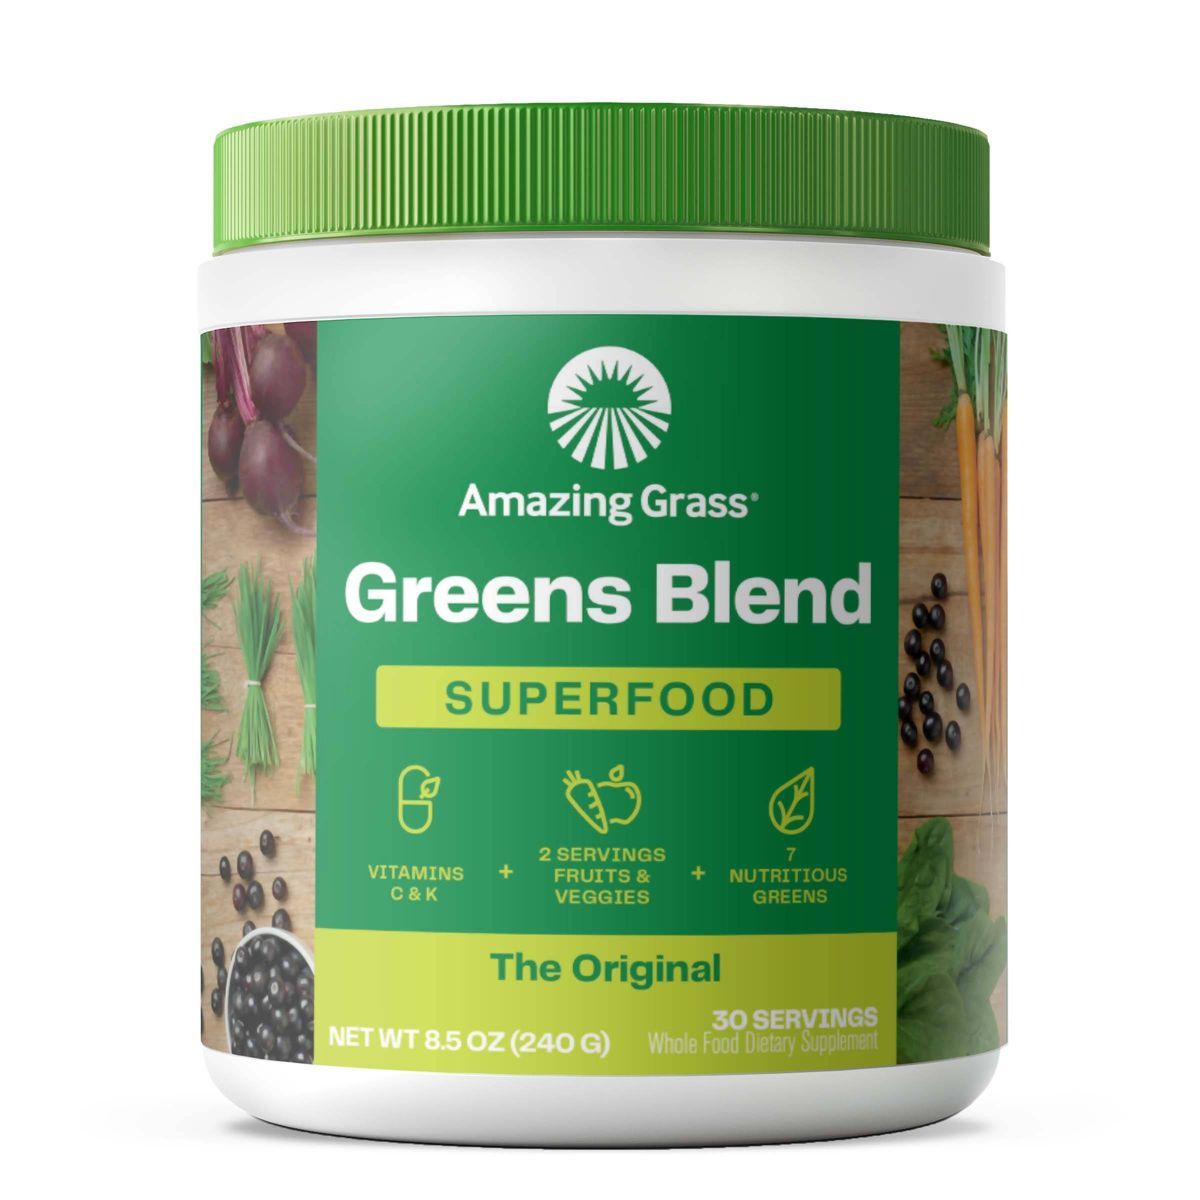 Amazing Grass Greens Blend Superfood Vegan Powder - Original - 8.5oz | Target